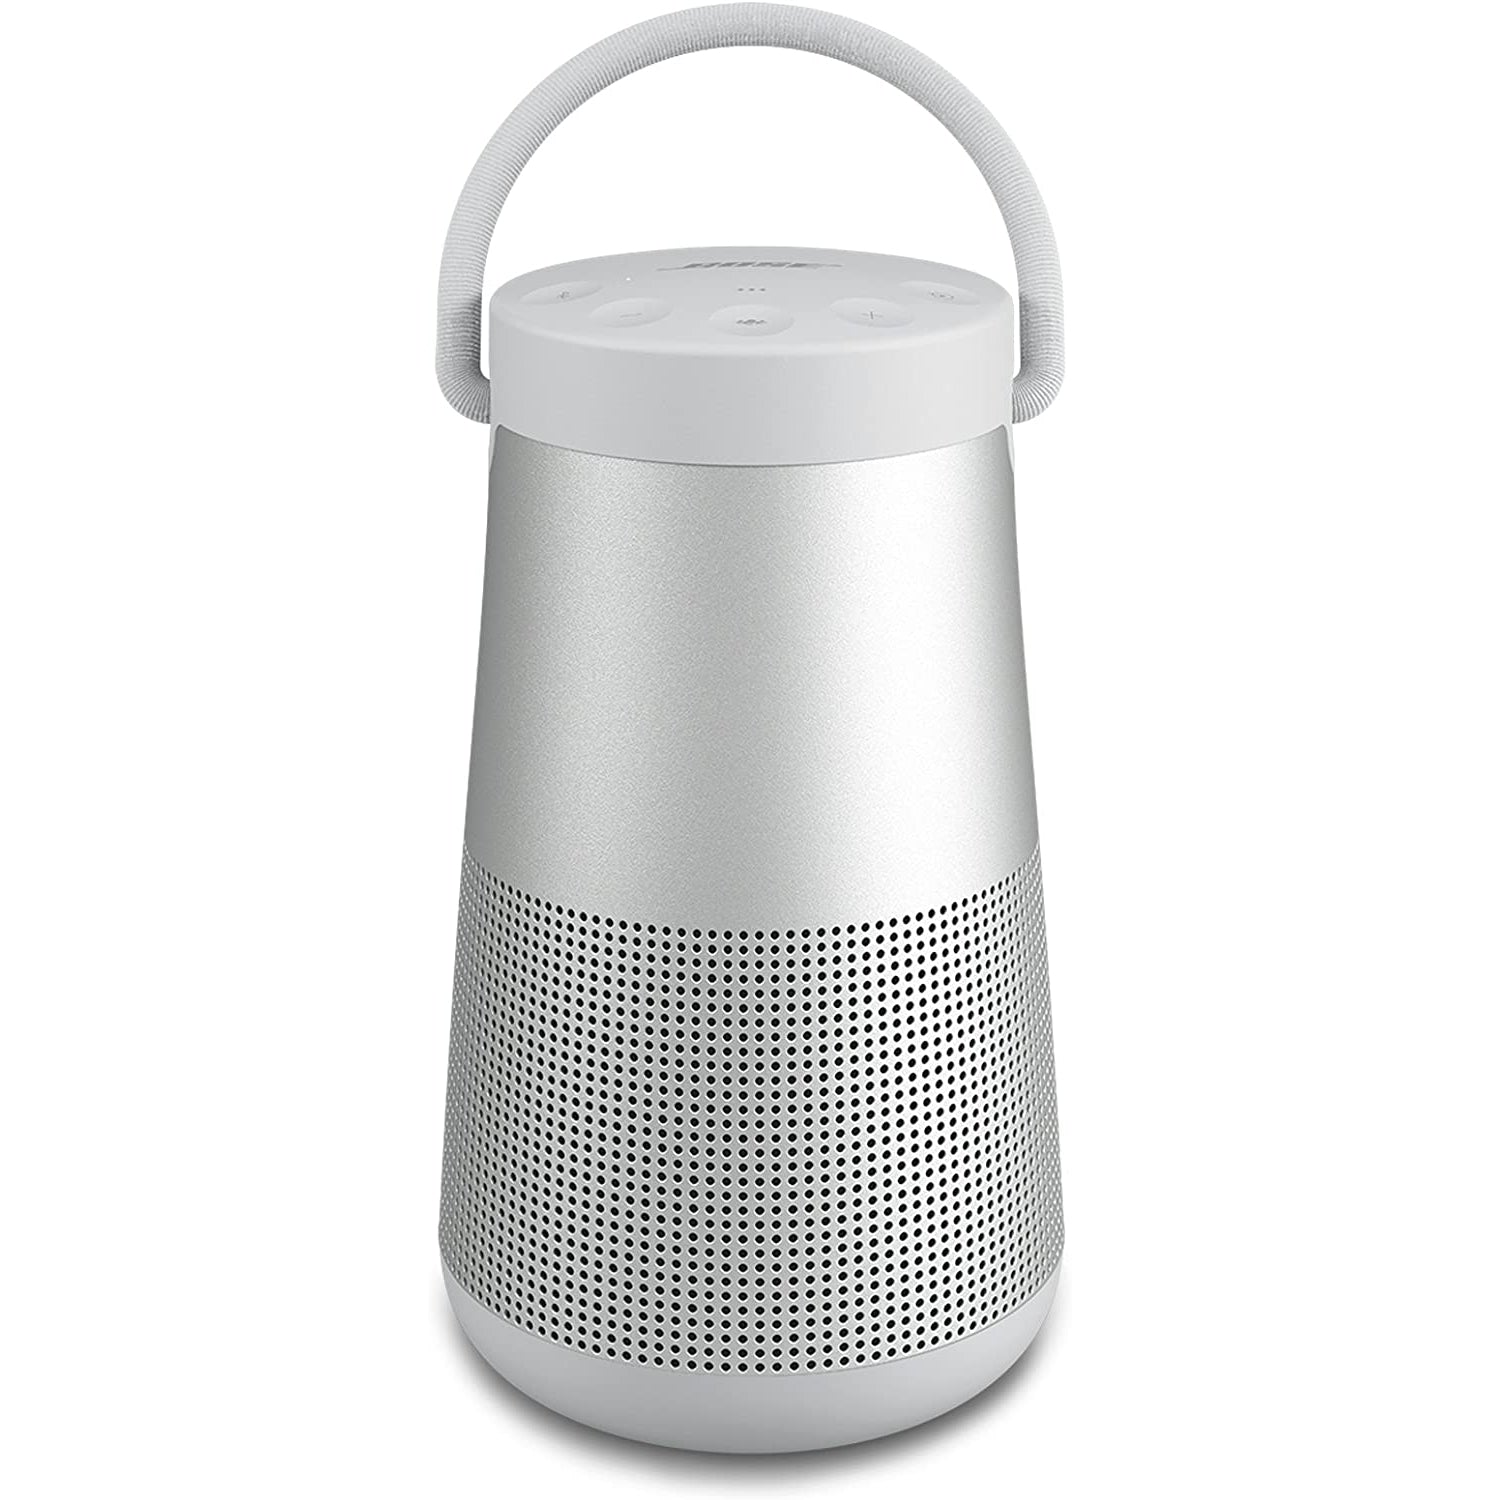 Bose SoundLink Revolve+ Portable Bluetooth Speaker - Luxe Silver - Refurbished Pristine